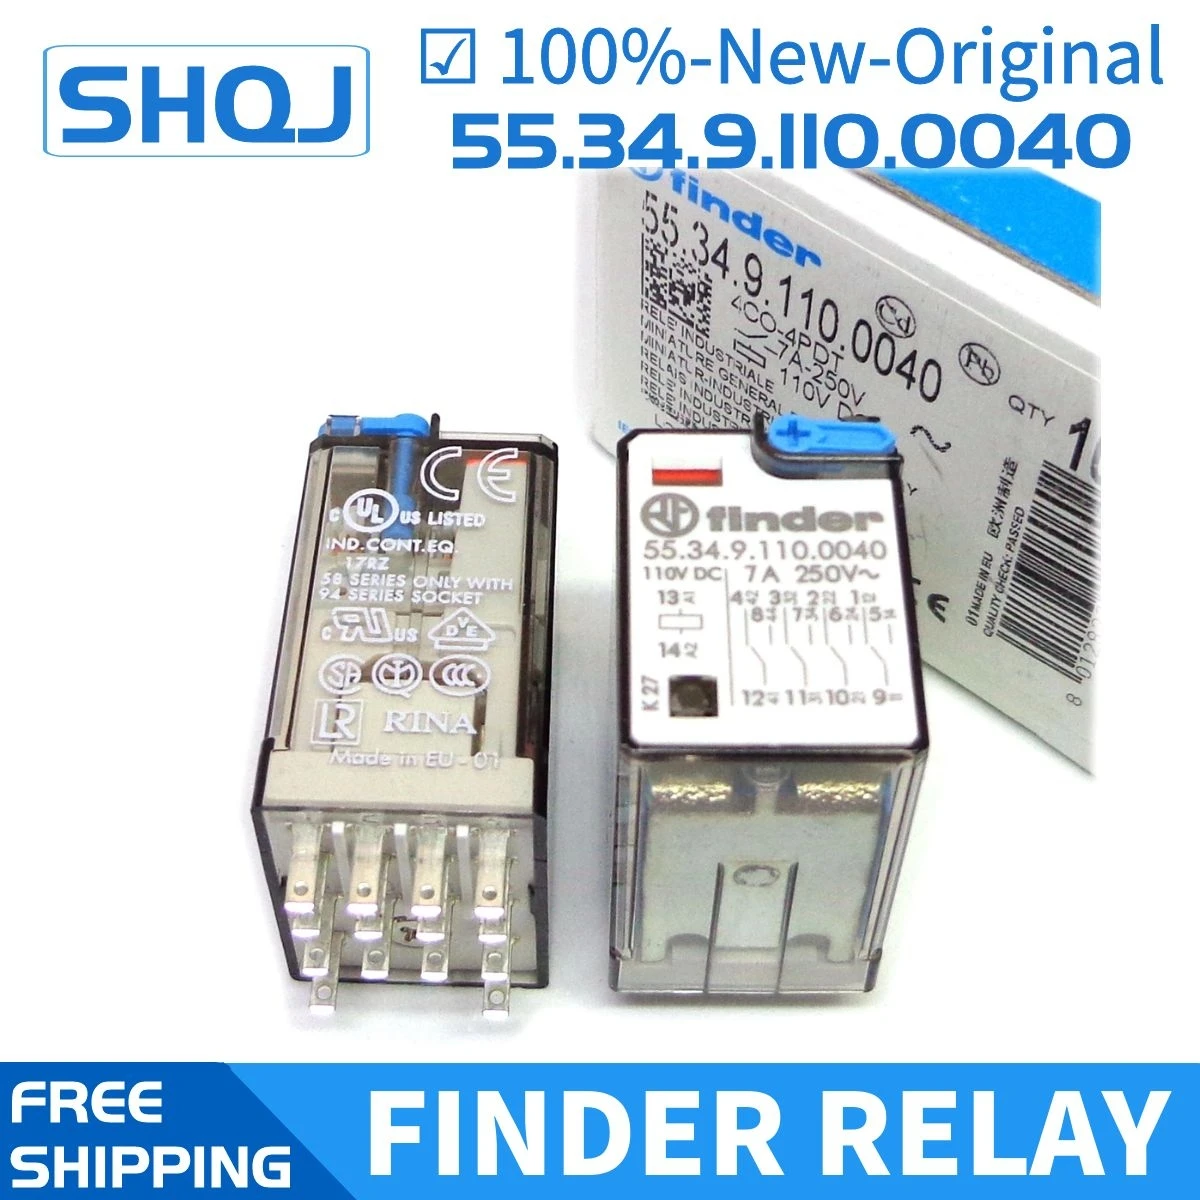 

finder relay 55.34.9.110.0040 110VDC 4CO 14PIN 7A 100%-new-original